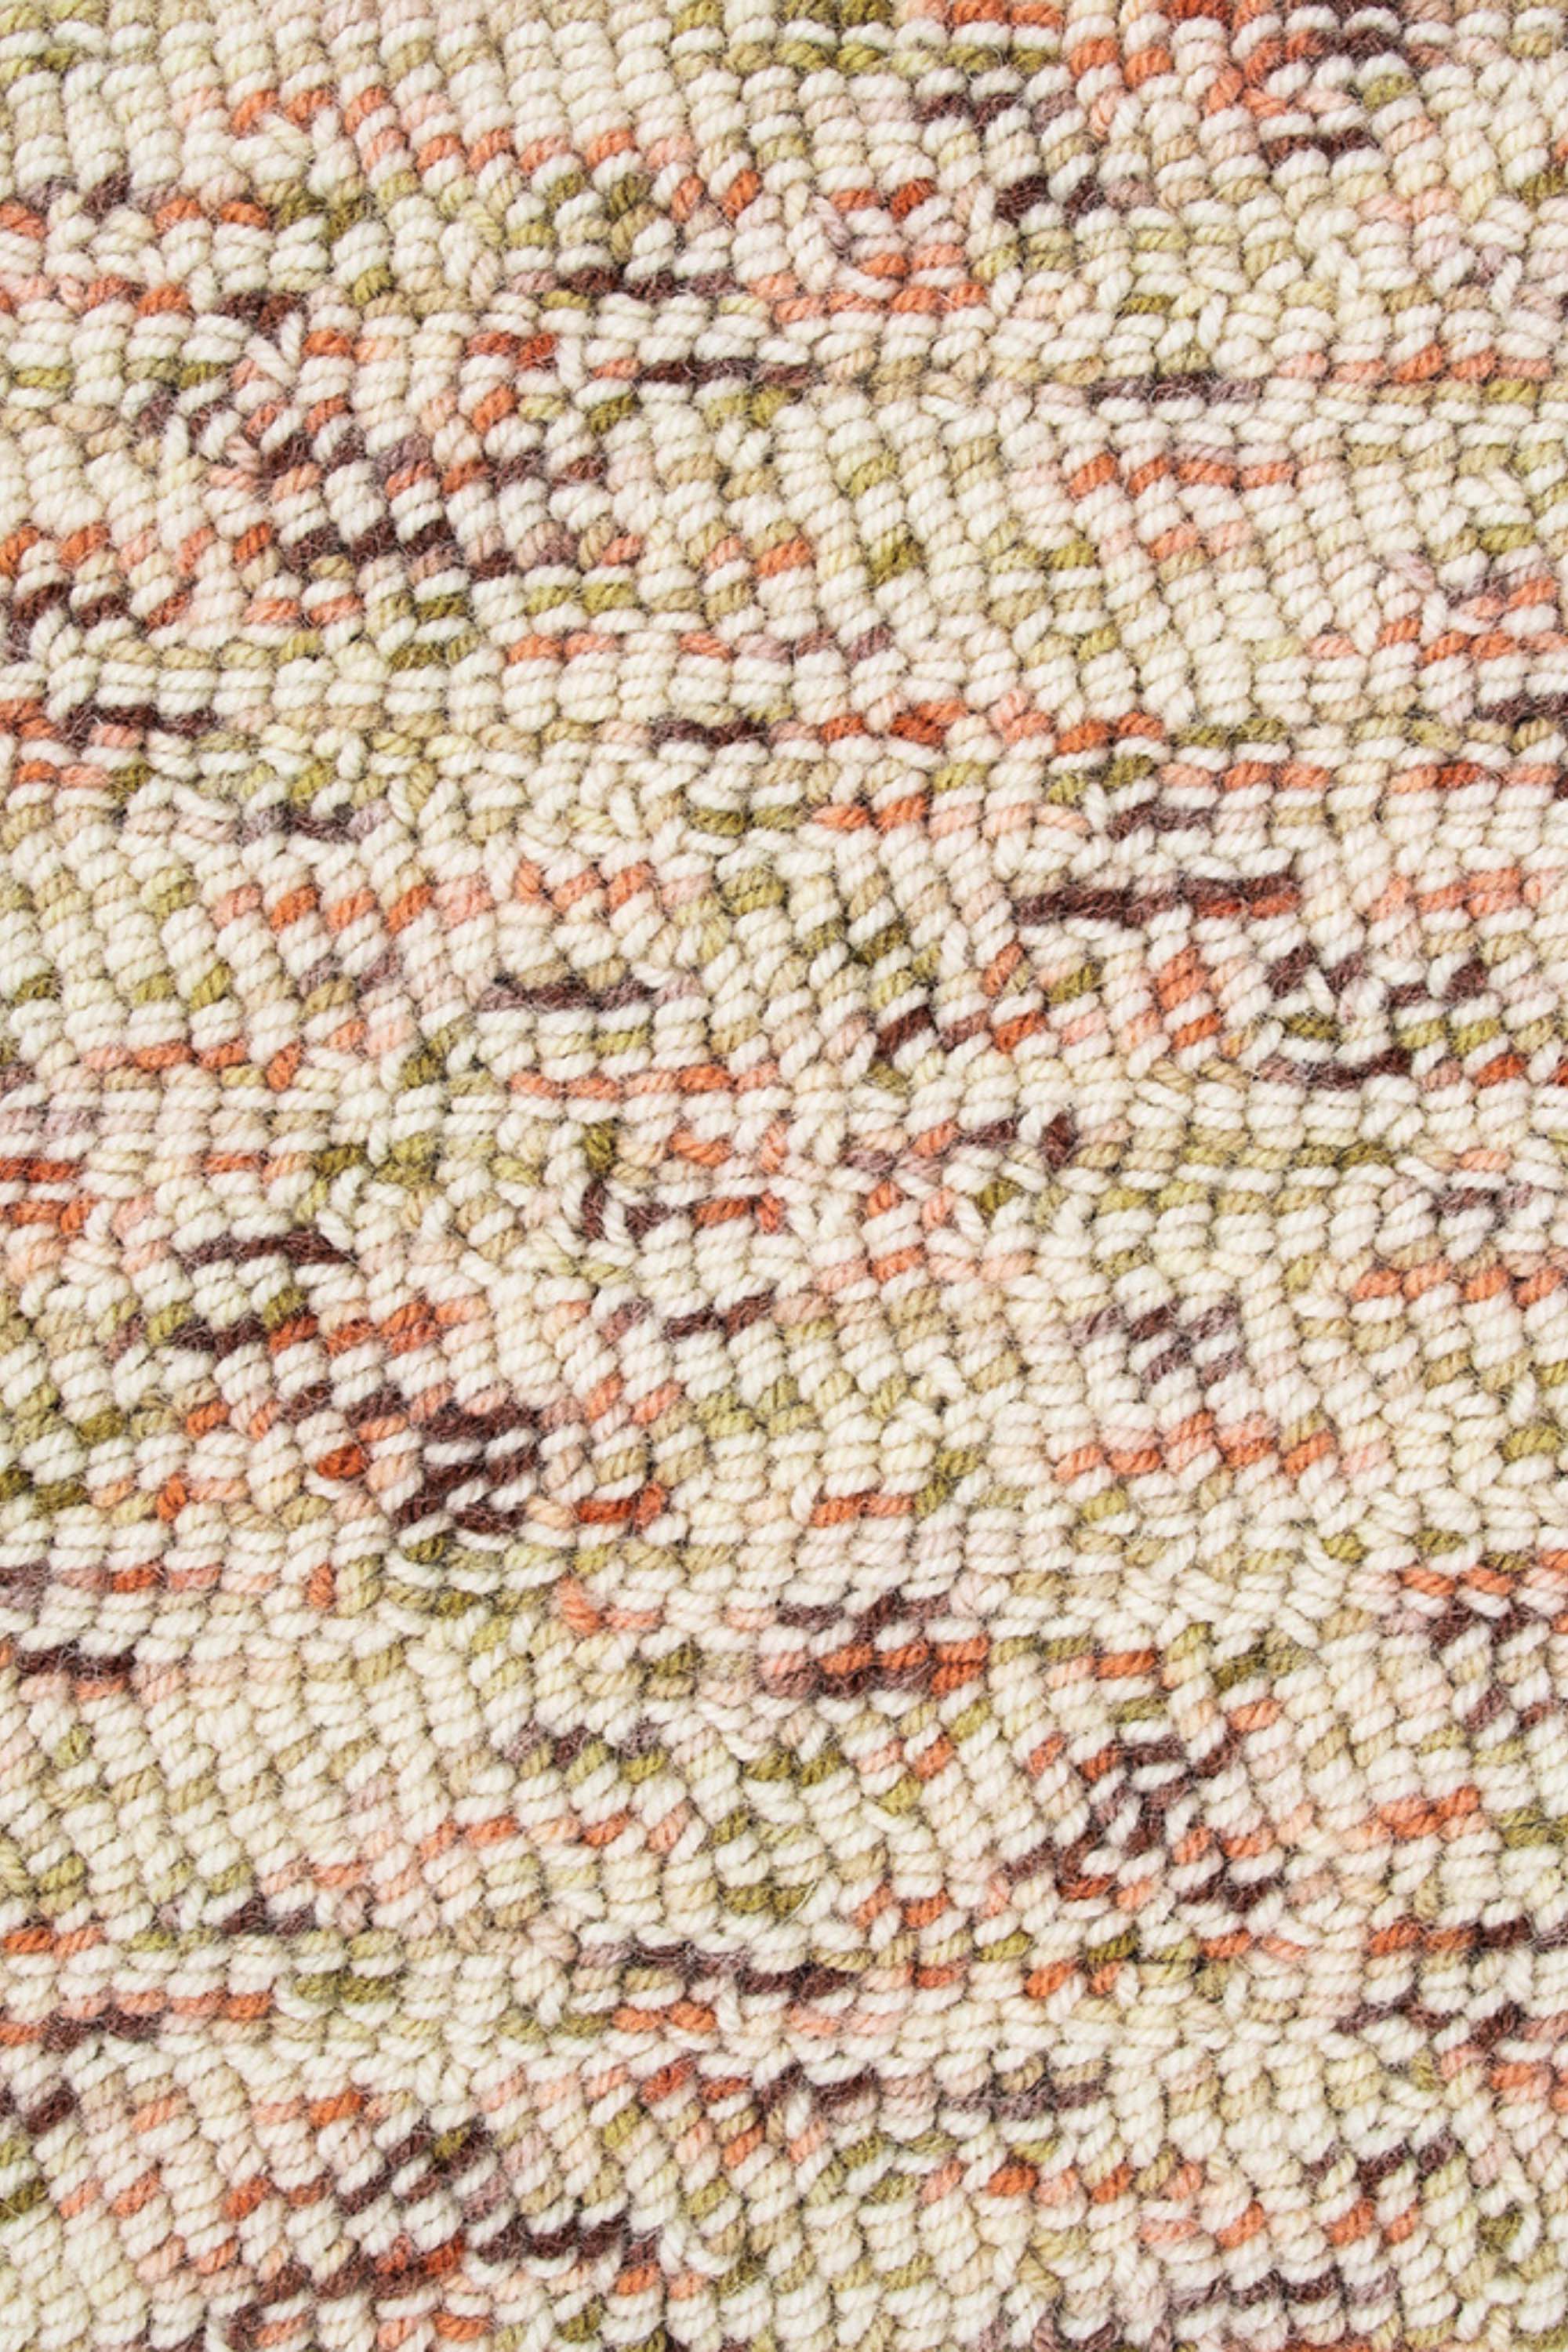 Plain flatweave rug with cream and multicolour pile